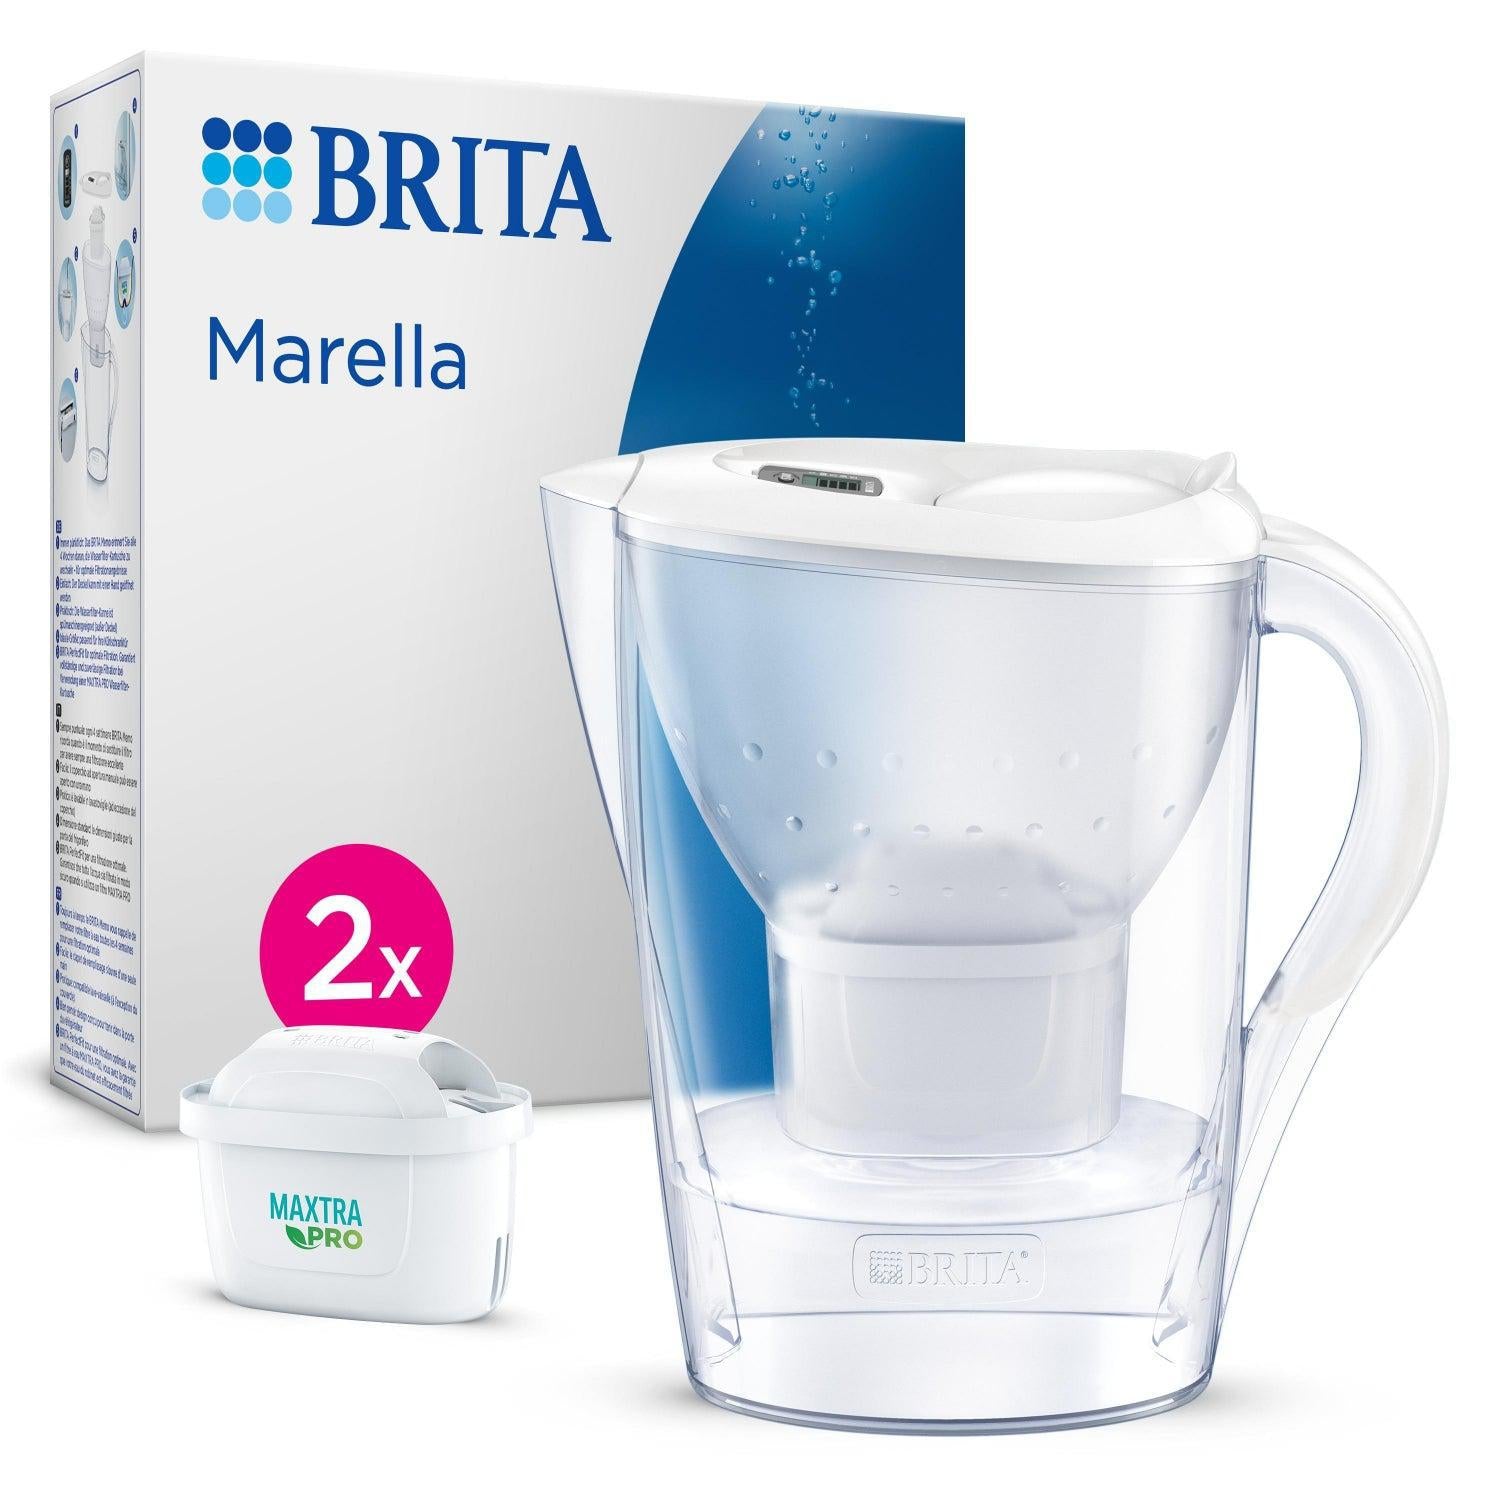 BRITA Marella Water Filter Jug with Maxtra Pro White 2.4l with 2 Cartridge Refills